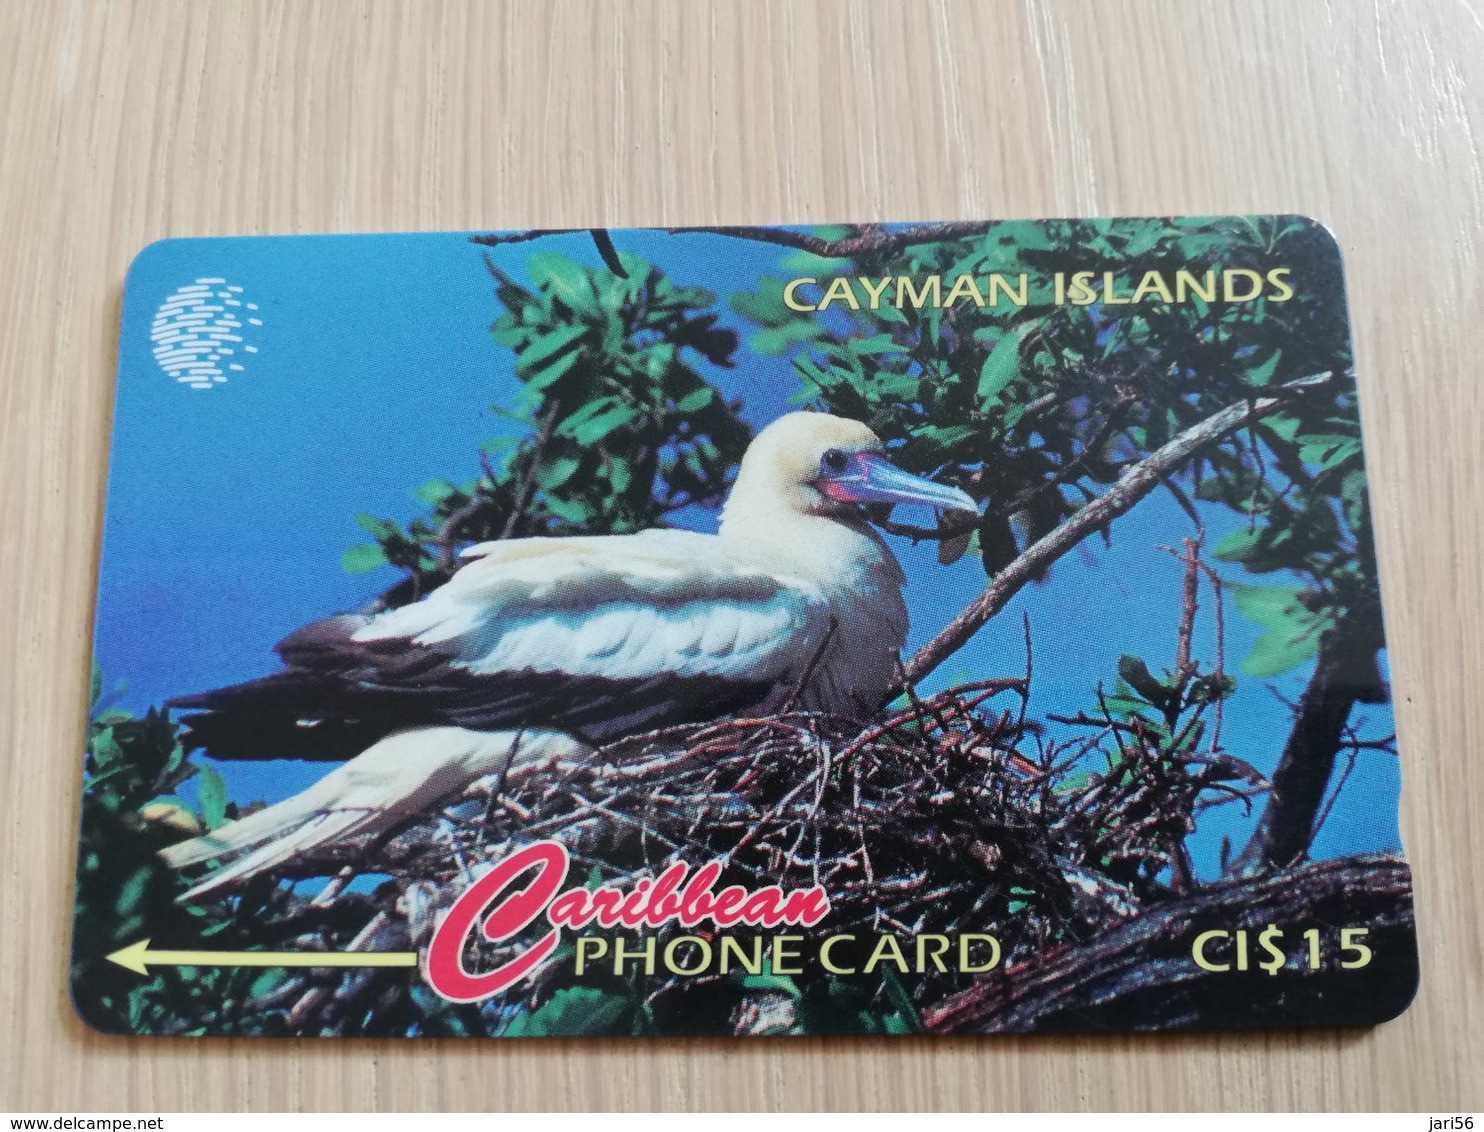 CAYMAN ISLANDS  CI $ 10,-  CAY-11D  CONTROL NR 11CCID  RED FOOTED BOOBY      NEW  LOGO     Fine Used Card  ** 3085** - Iles Cayman